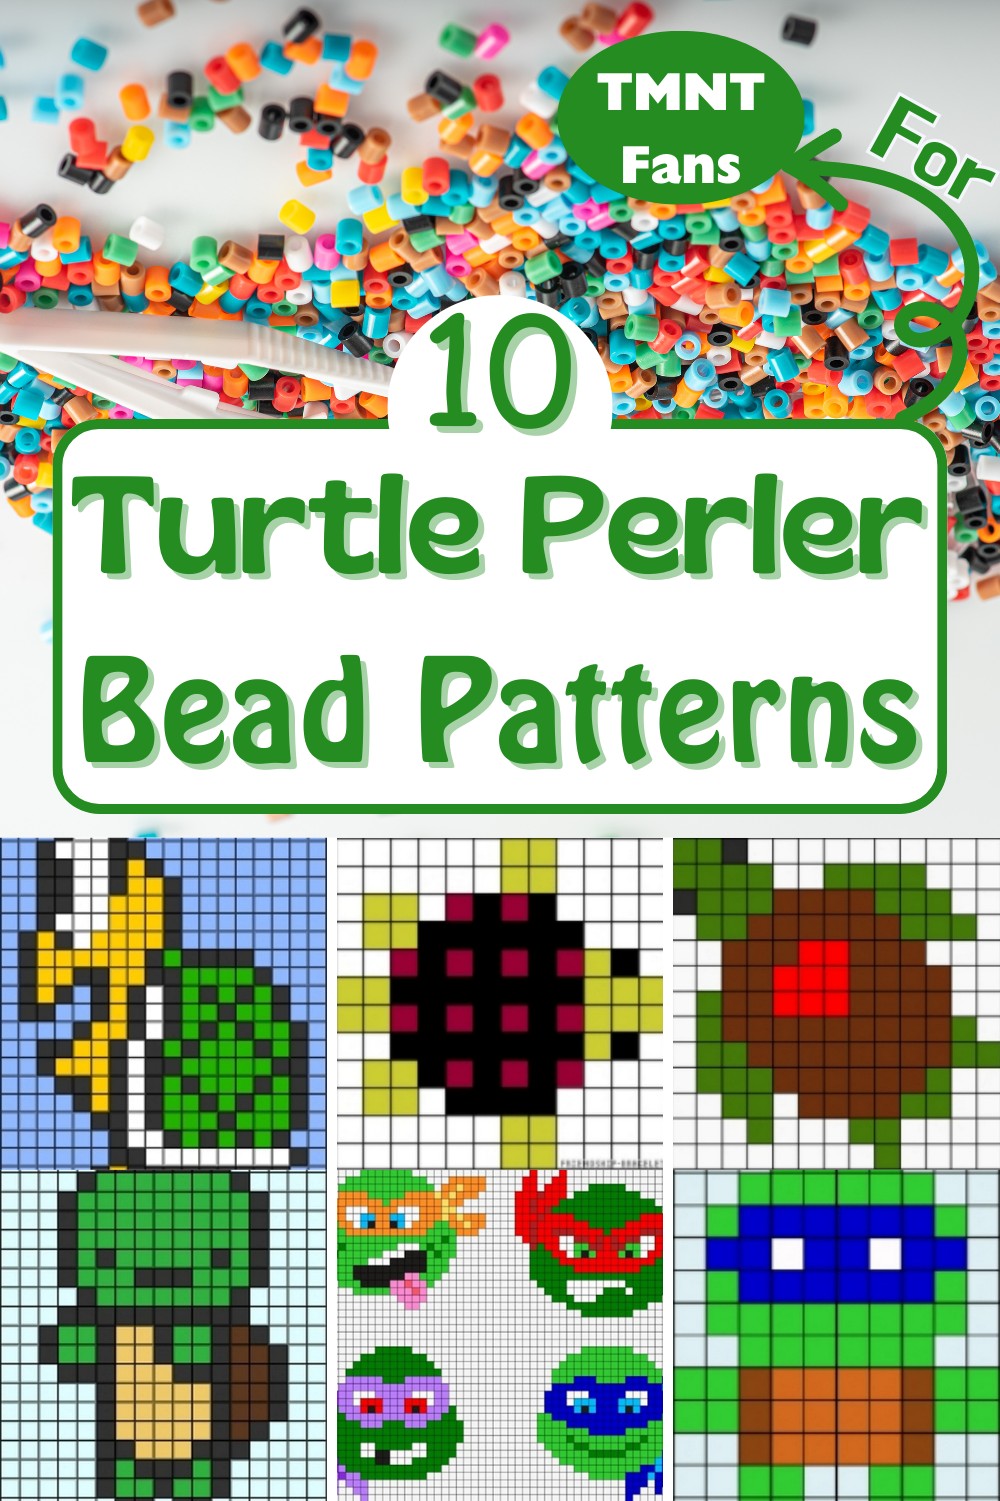 10 Turtle Perler Bead Patterns For TMNT Fans